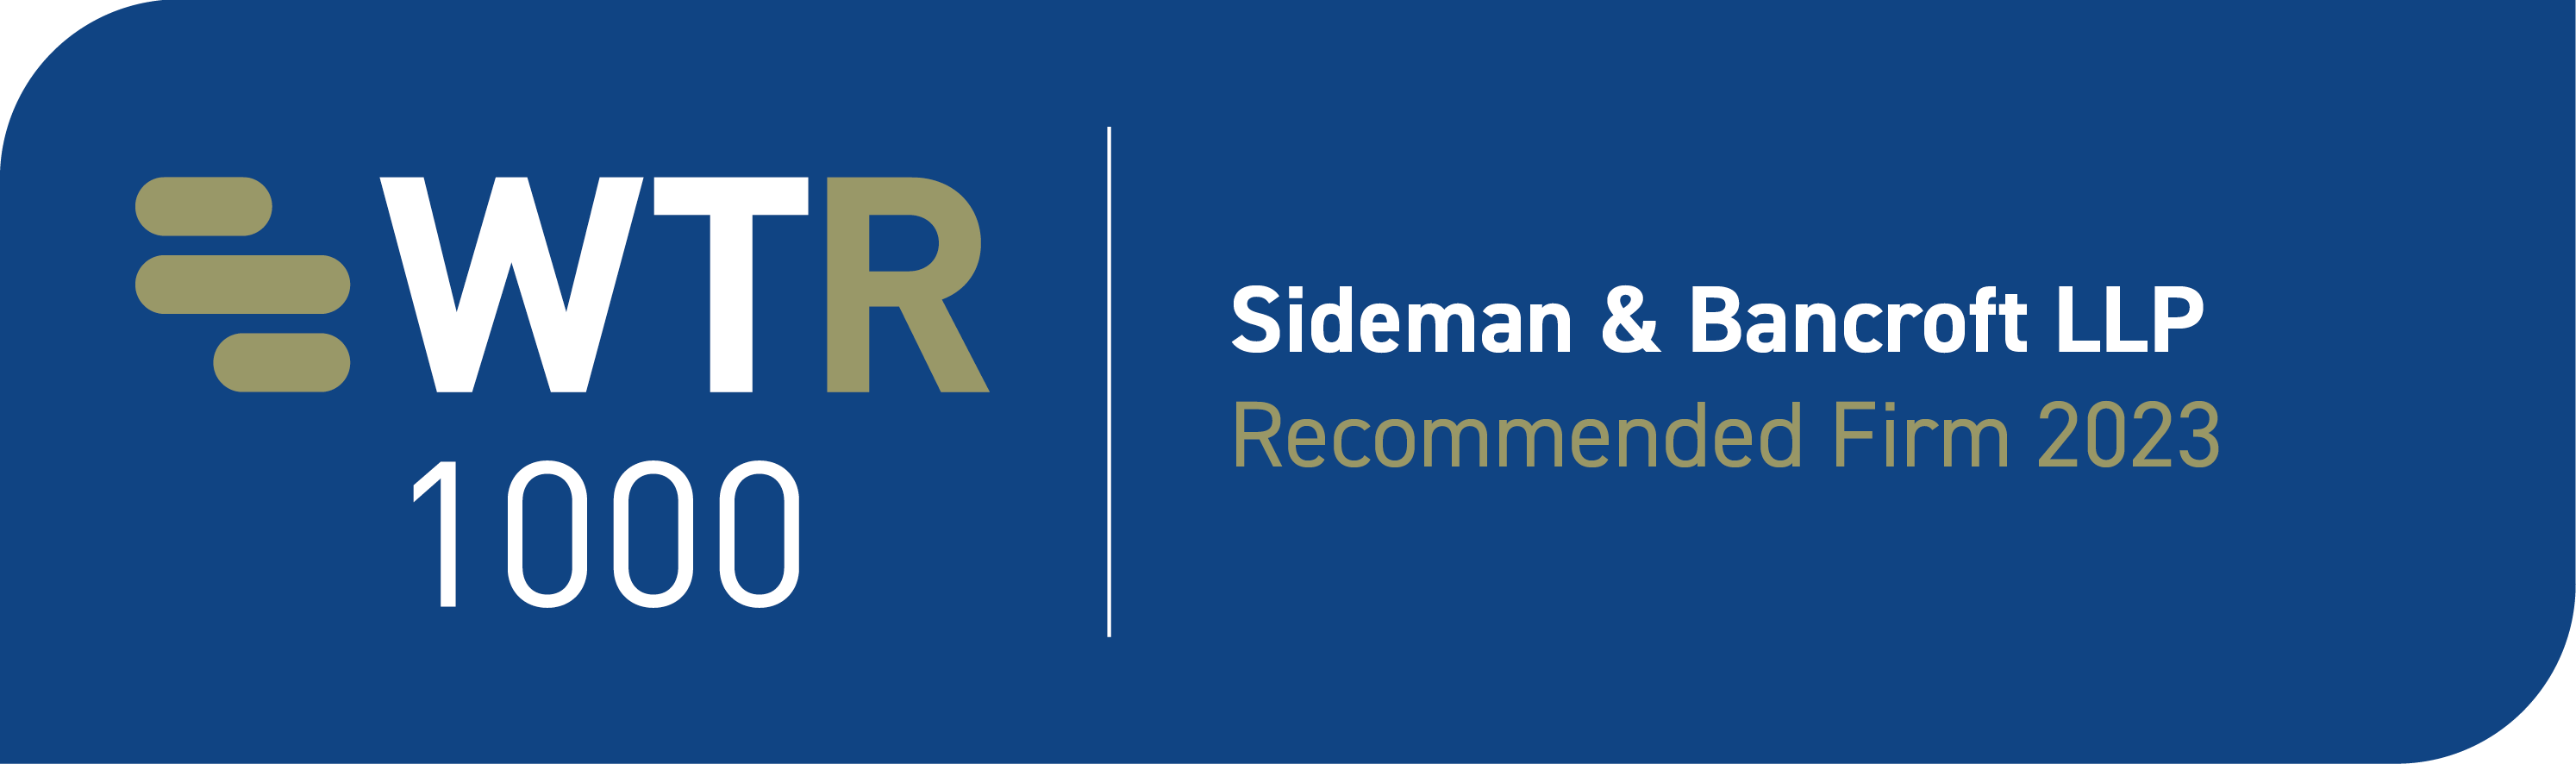 WTR recommendation banner for Sideman & Bancroft 2023